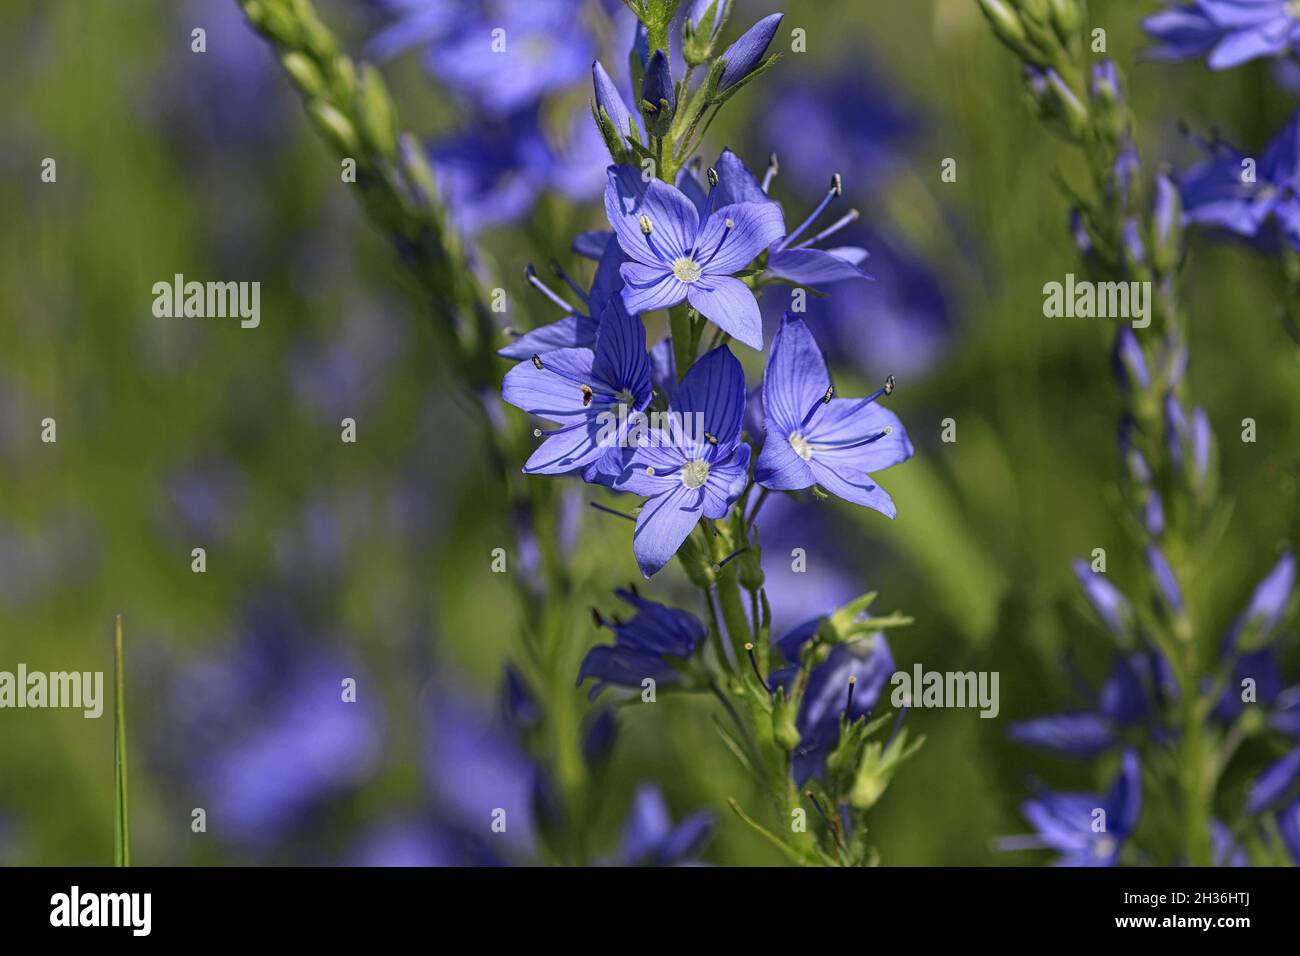 Flores violetas silvestres fotografías e imágenes de alta resolución - Alamy